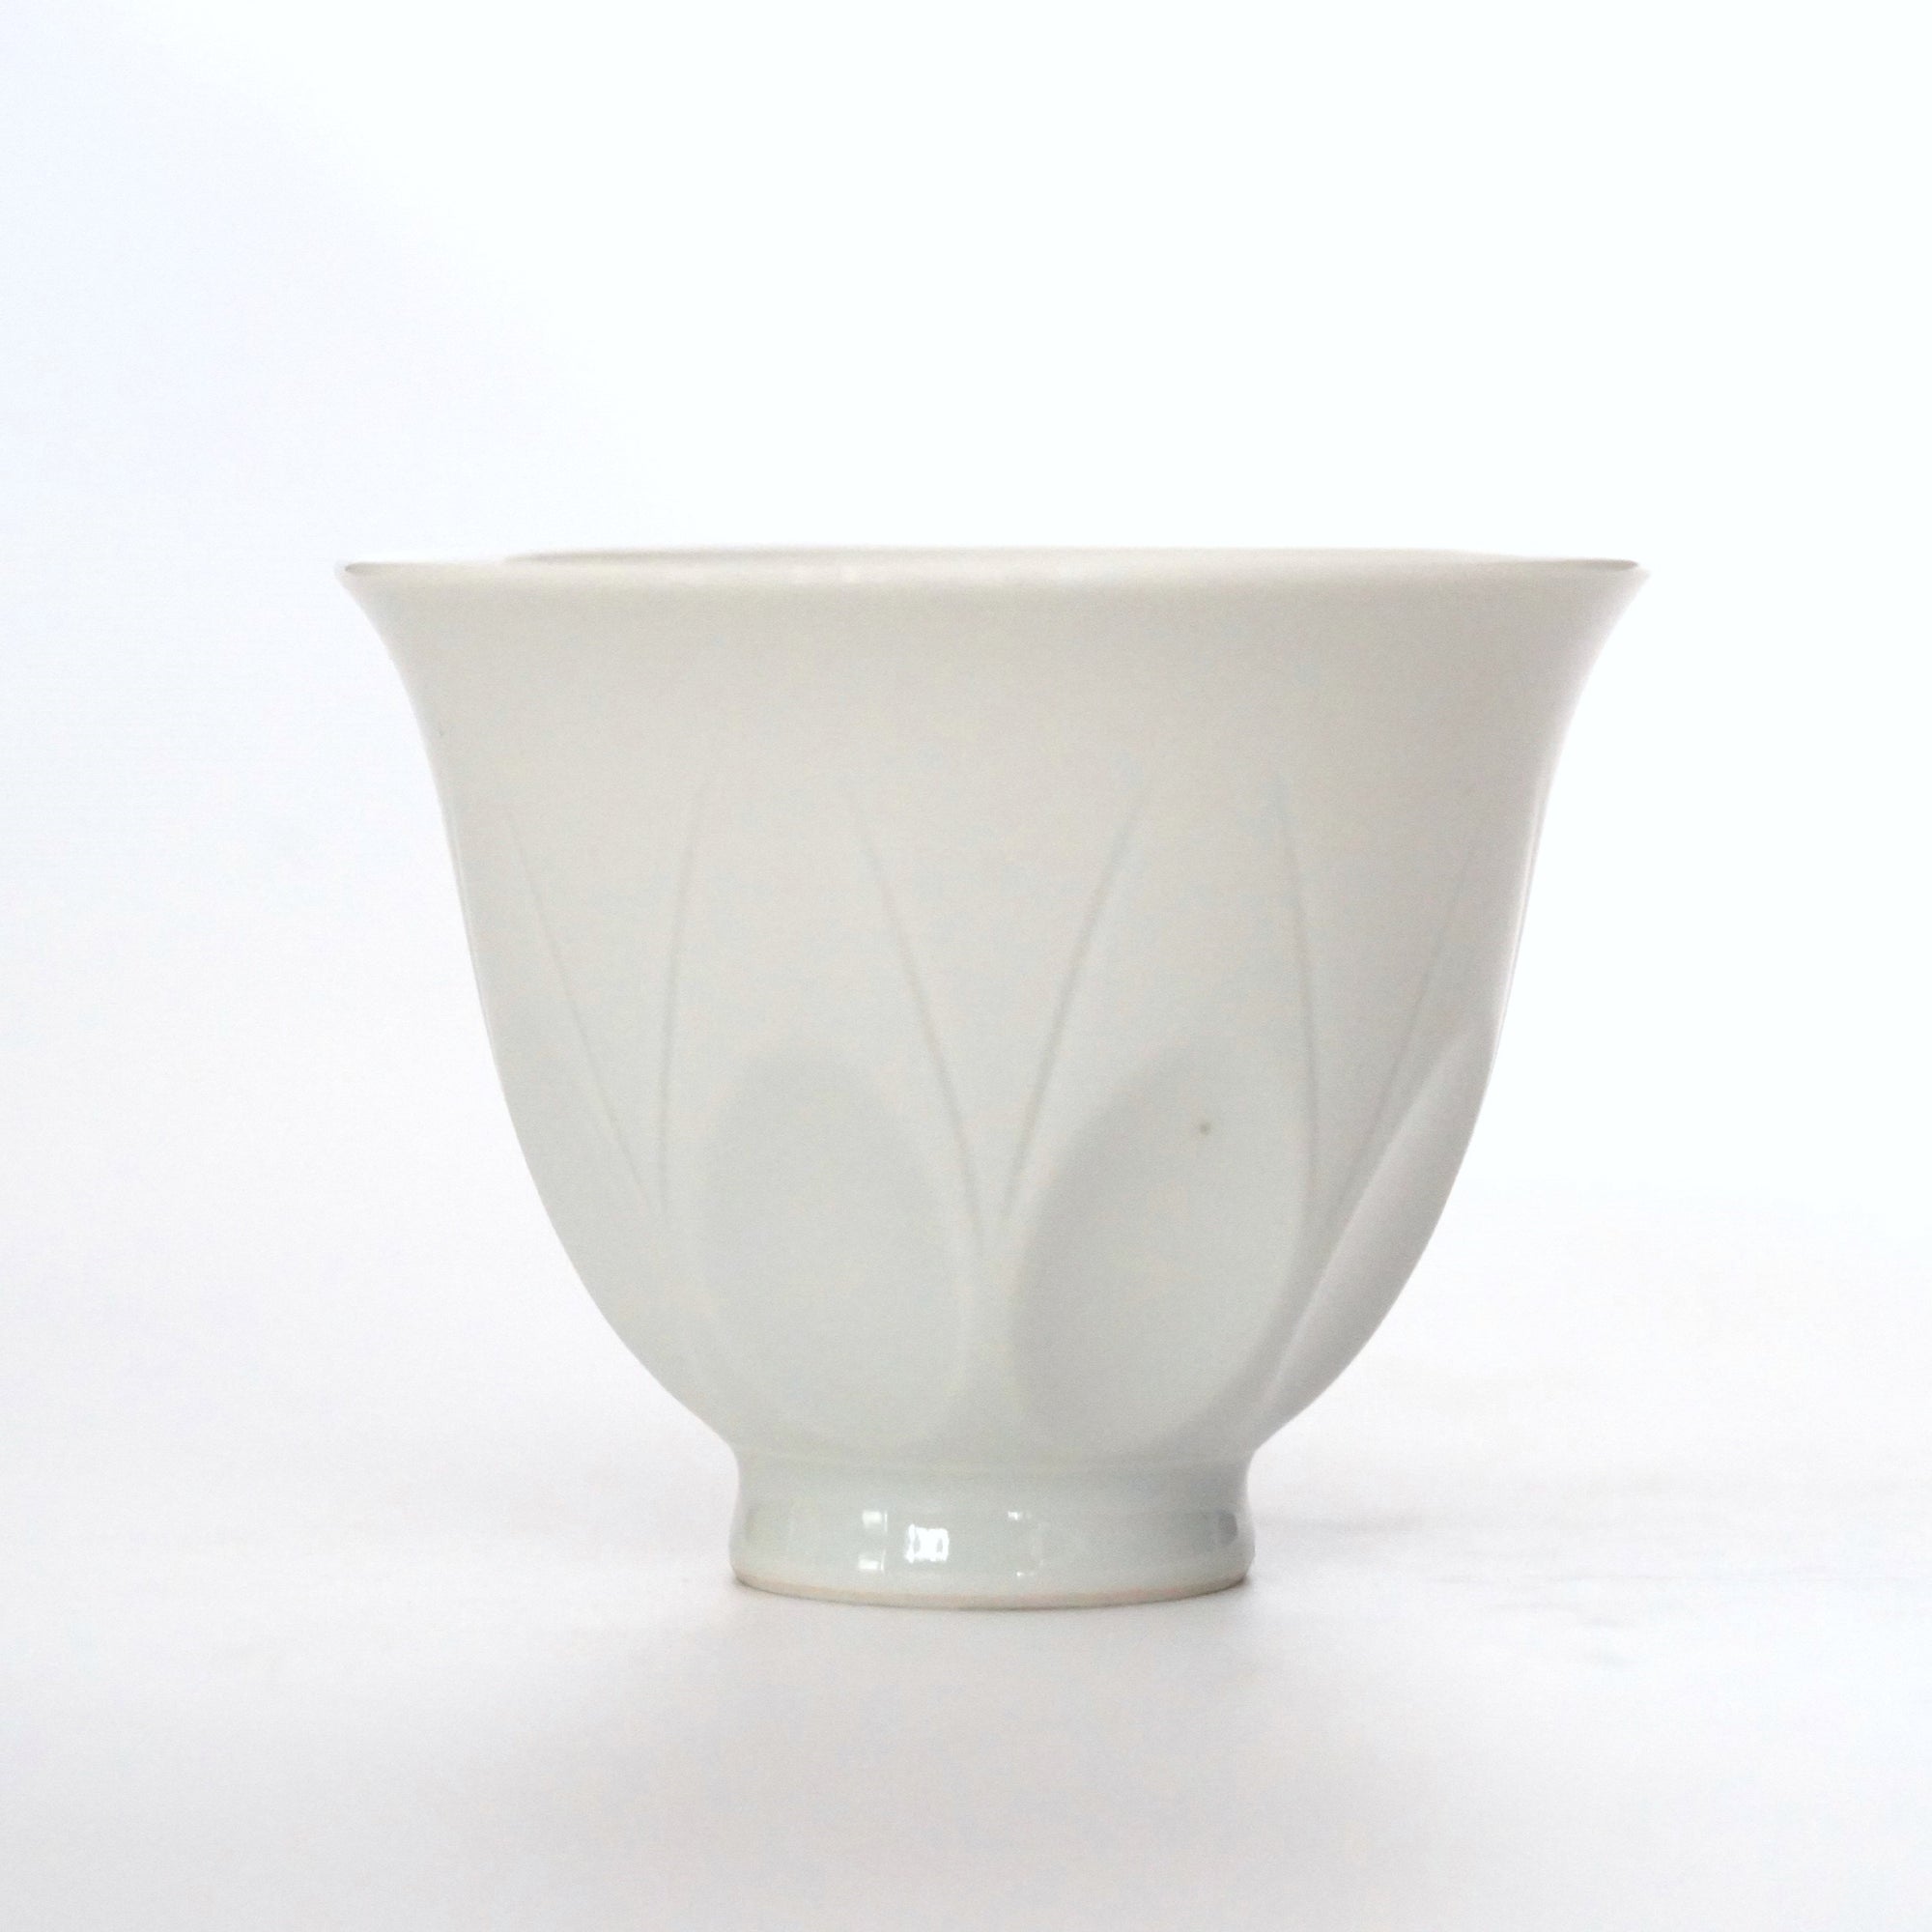 [Masamitsu Kawai] White porcelain teacup